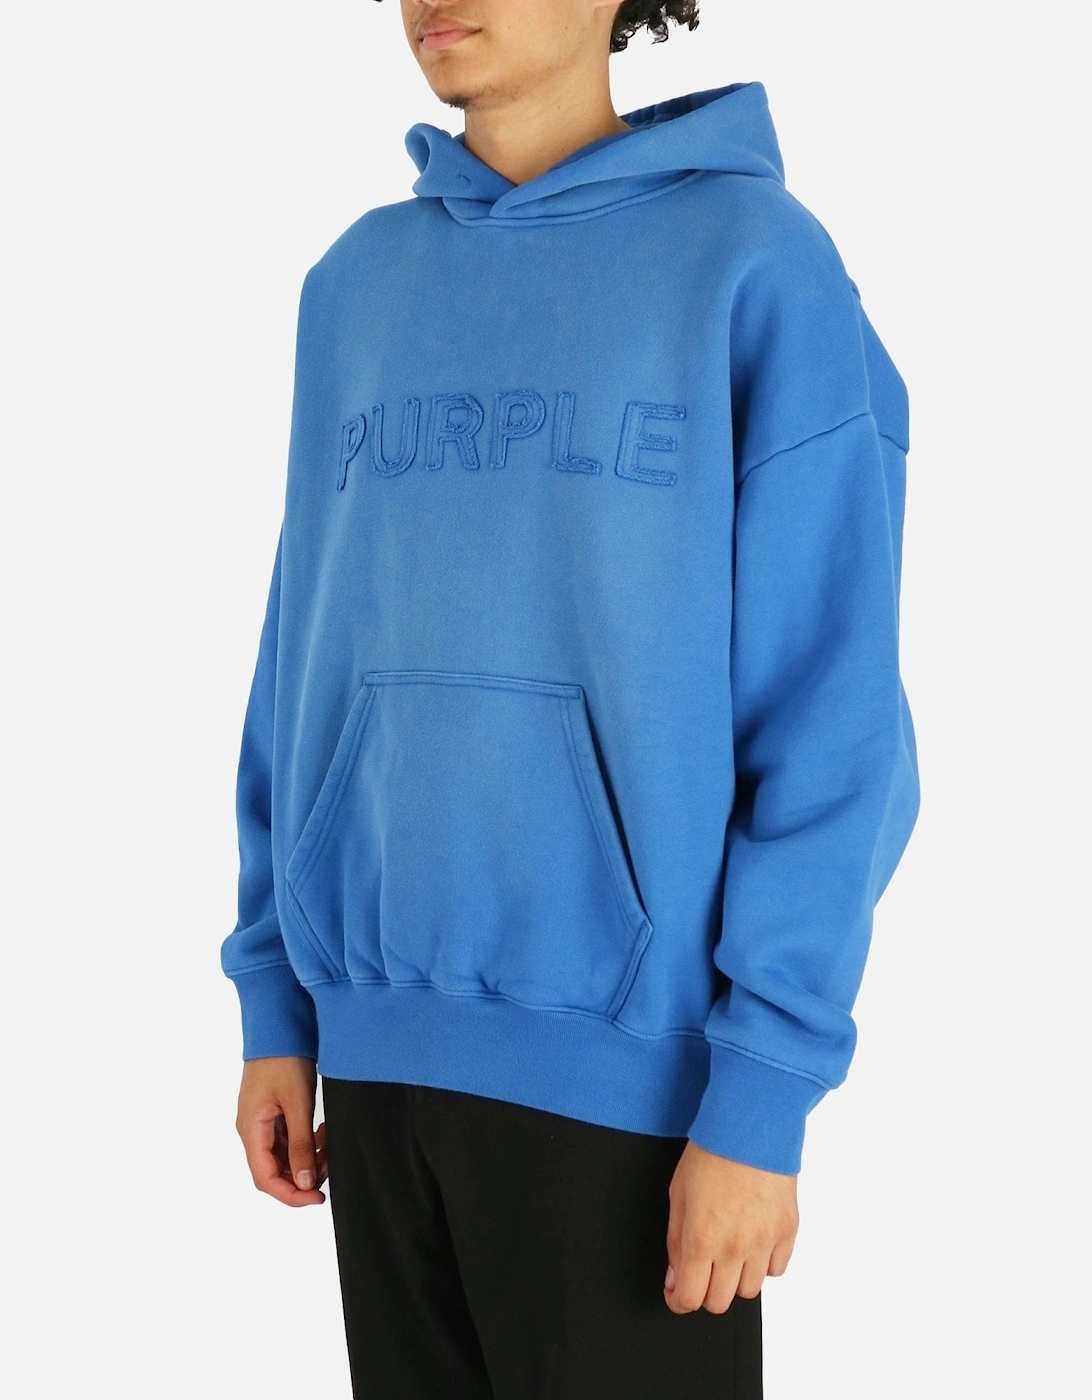 Applique Logo Pullover Hoodie Blue Sweatshirt